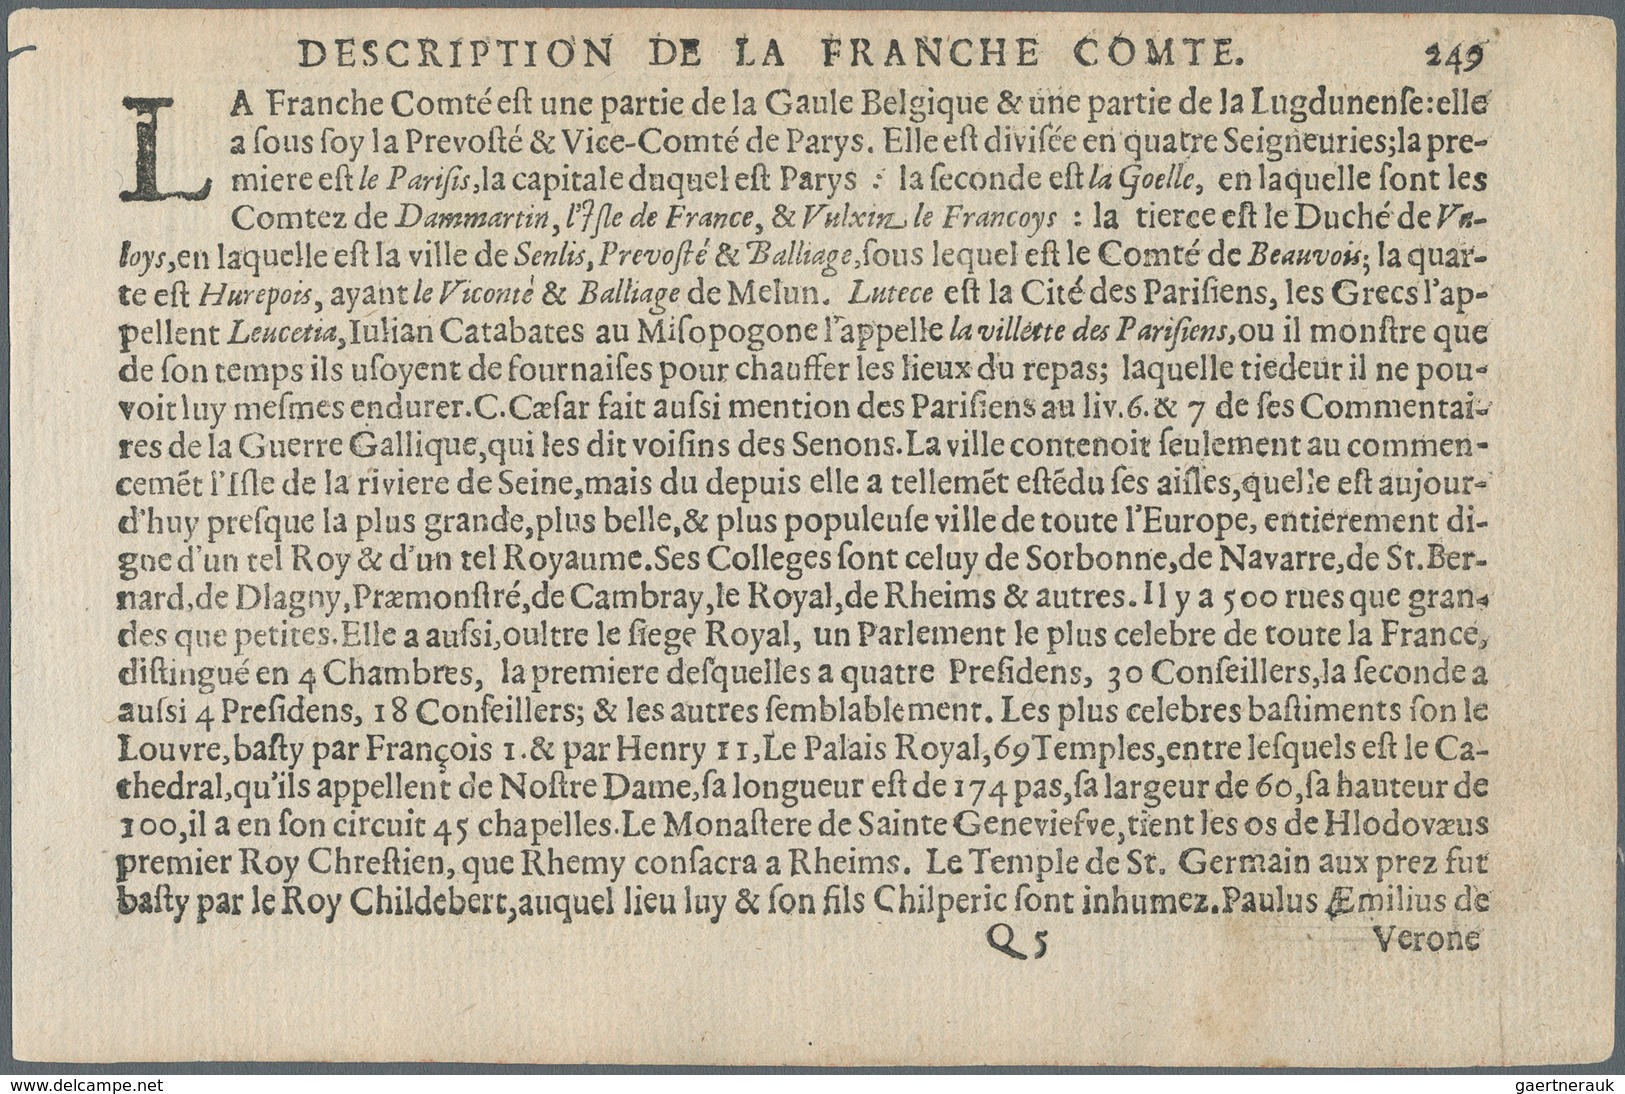 Landkarten Und Stiche: 1610. France Comitatus, Description De La Franche Comte. Attractive Small For - Géographie